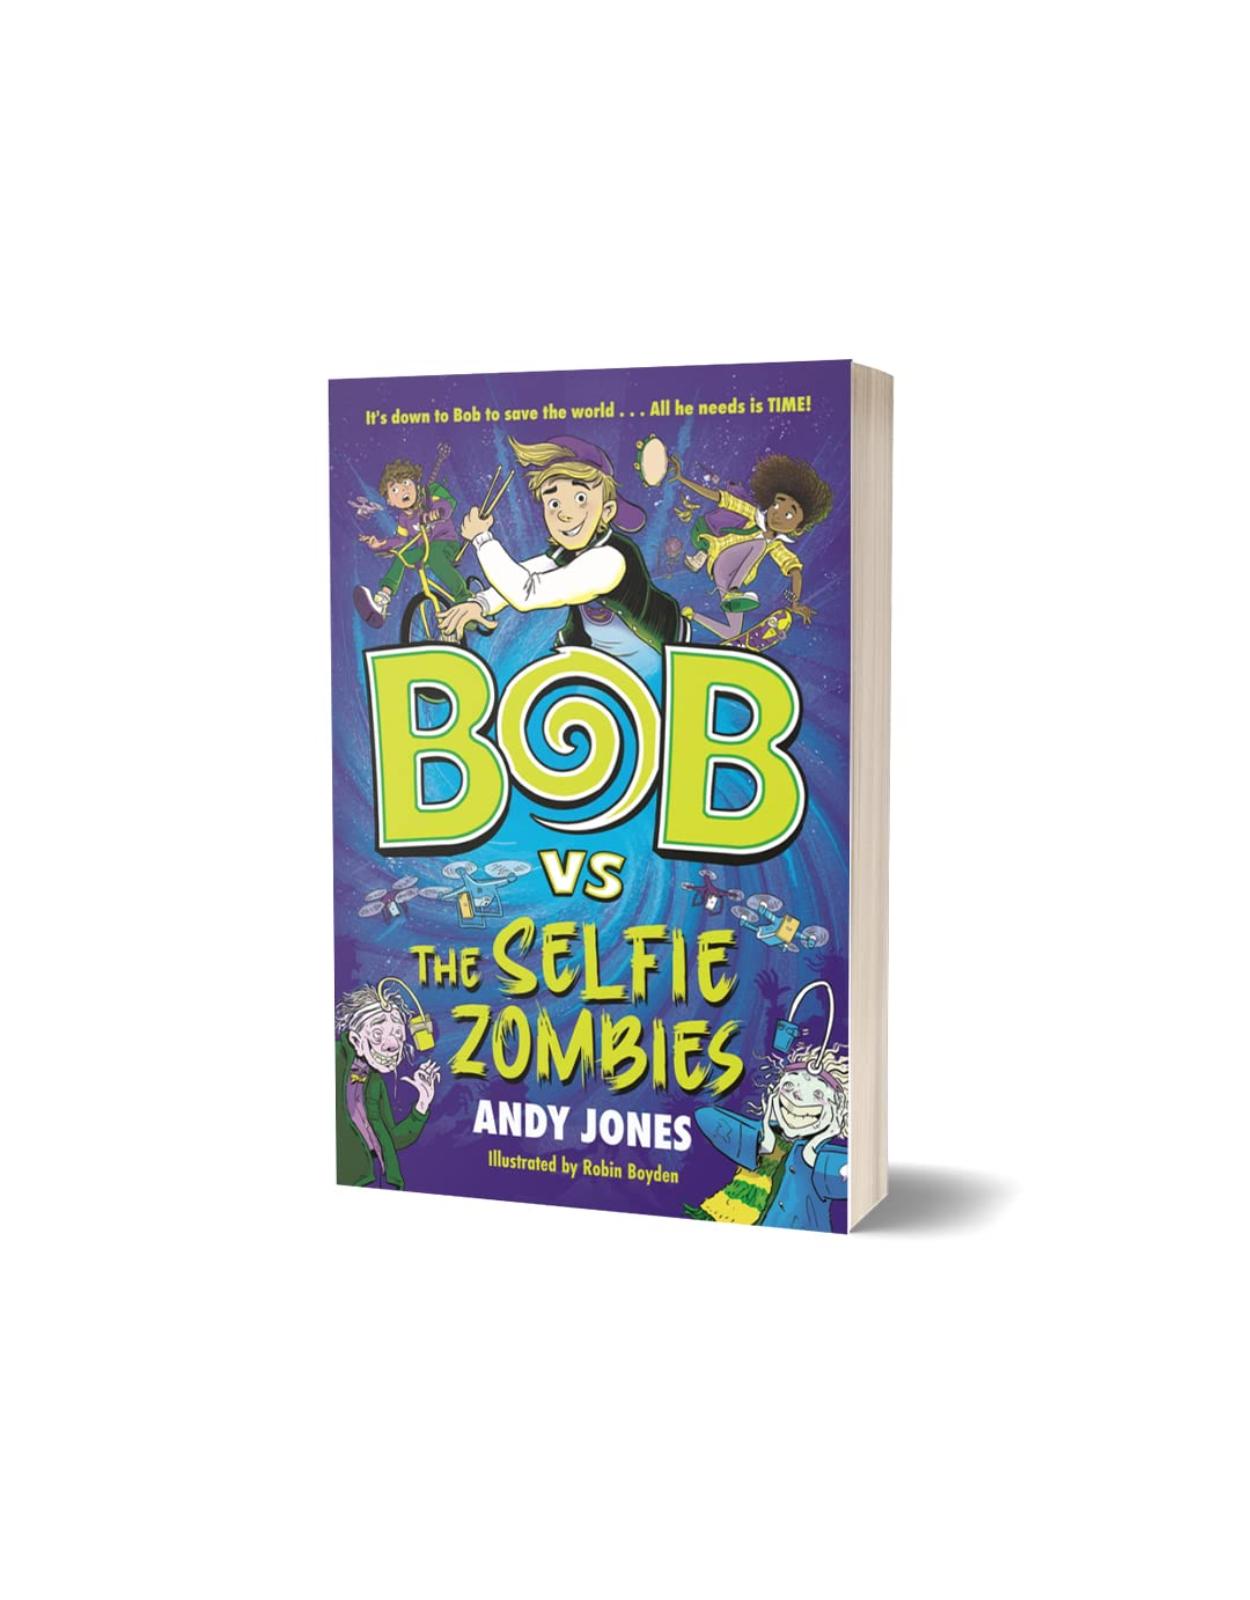 Bob vs the Selfie Zombies: a time-travel comedy adventure!